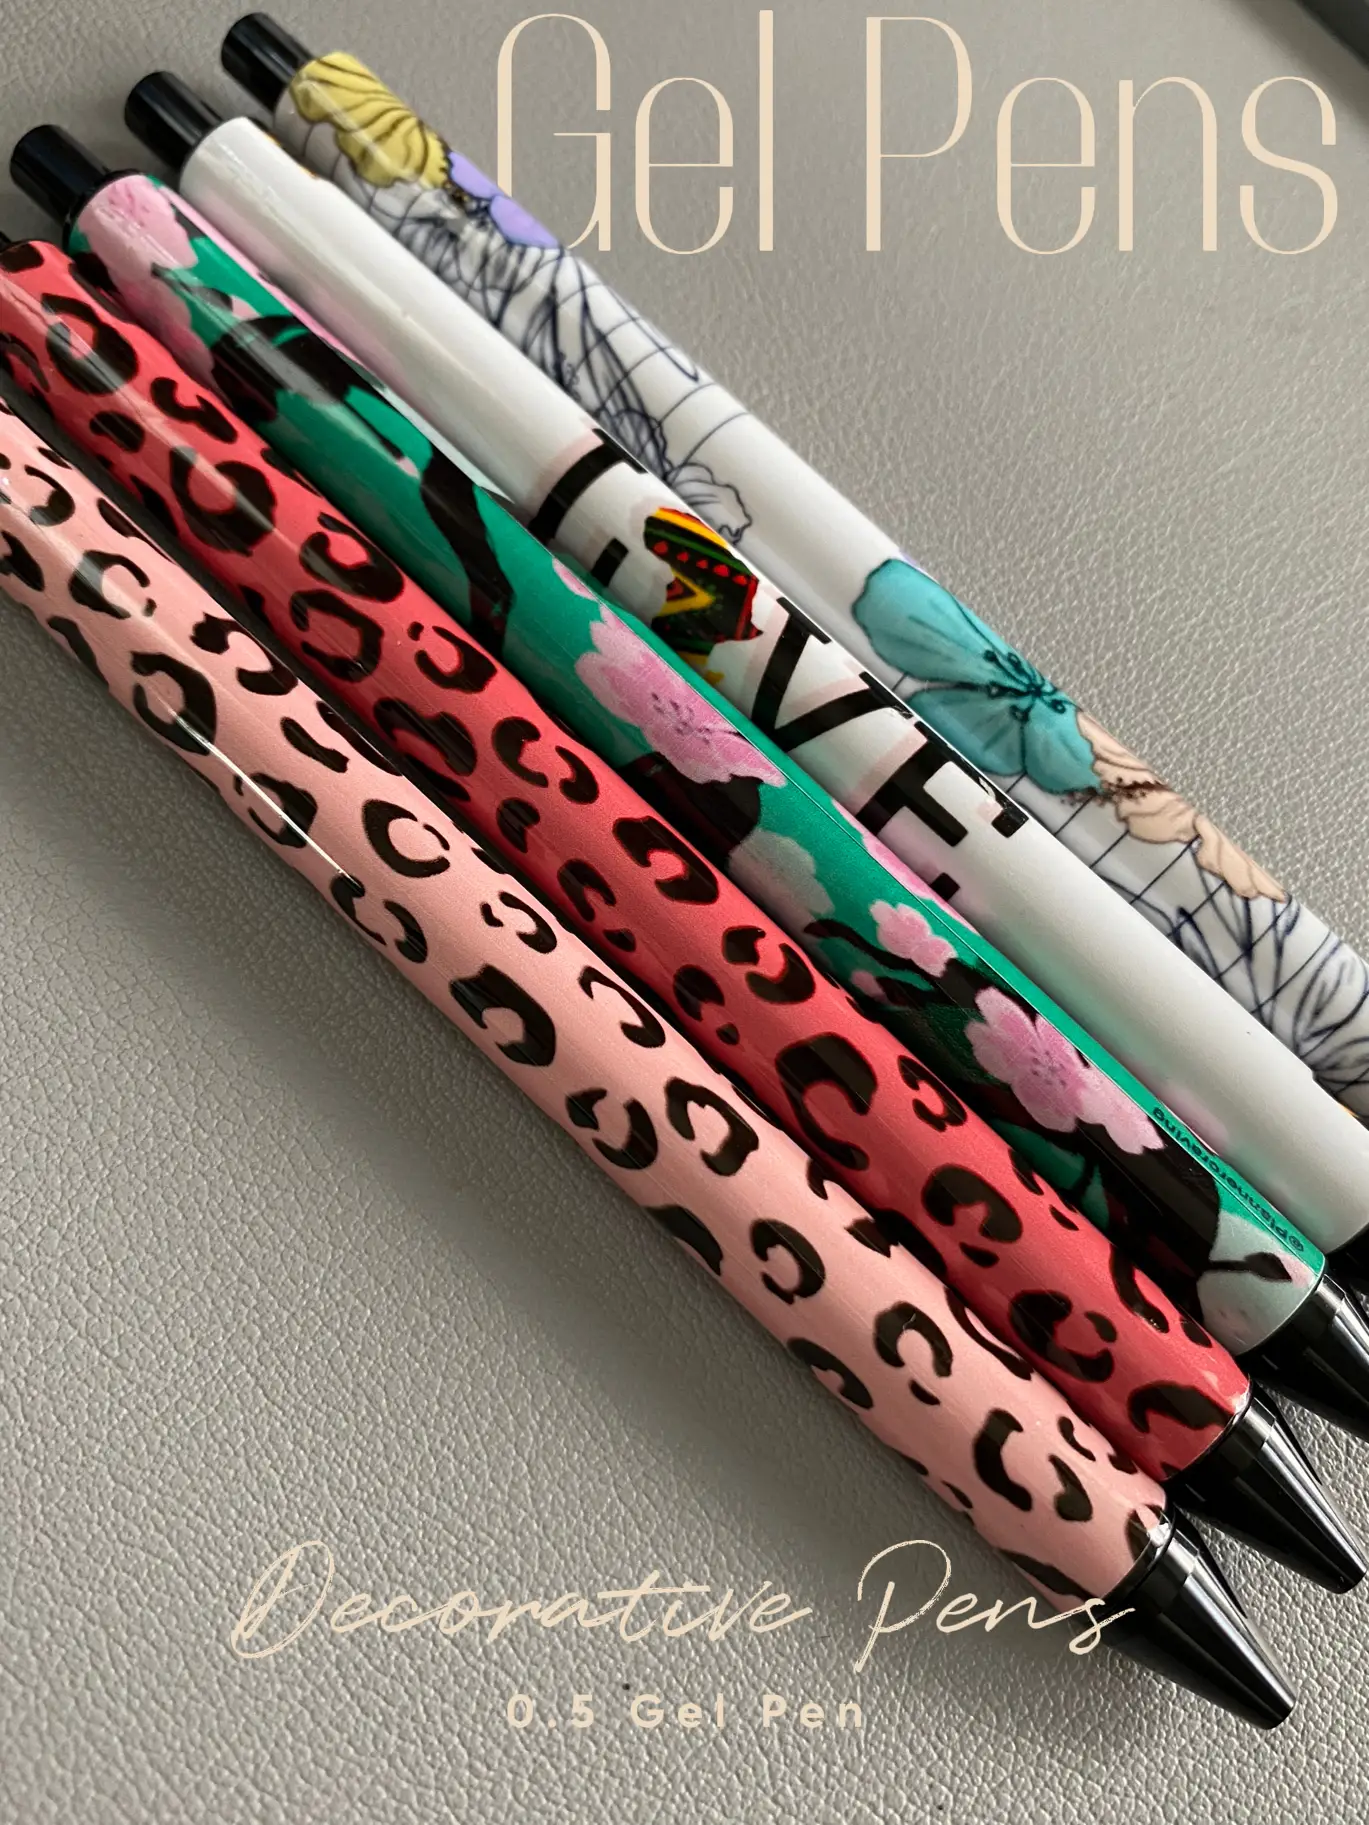 Zebra Sarasa Bouquet 5-Color Gel Pen Sets (0.5mm) – Everything Calligraphy